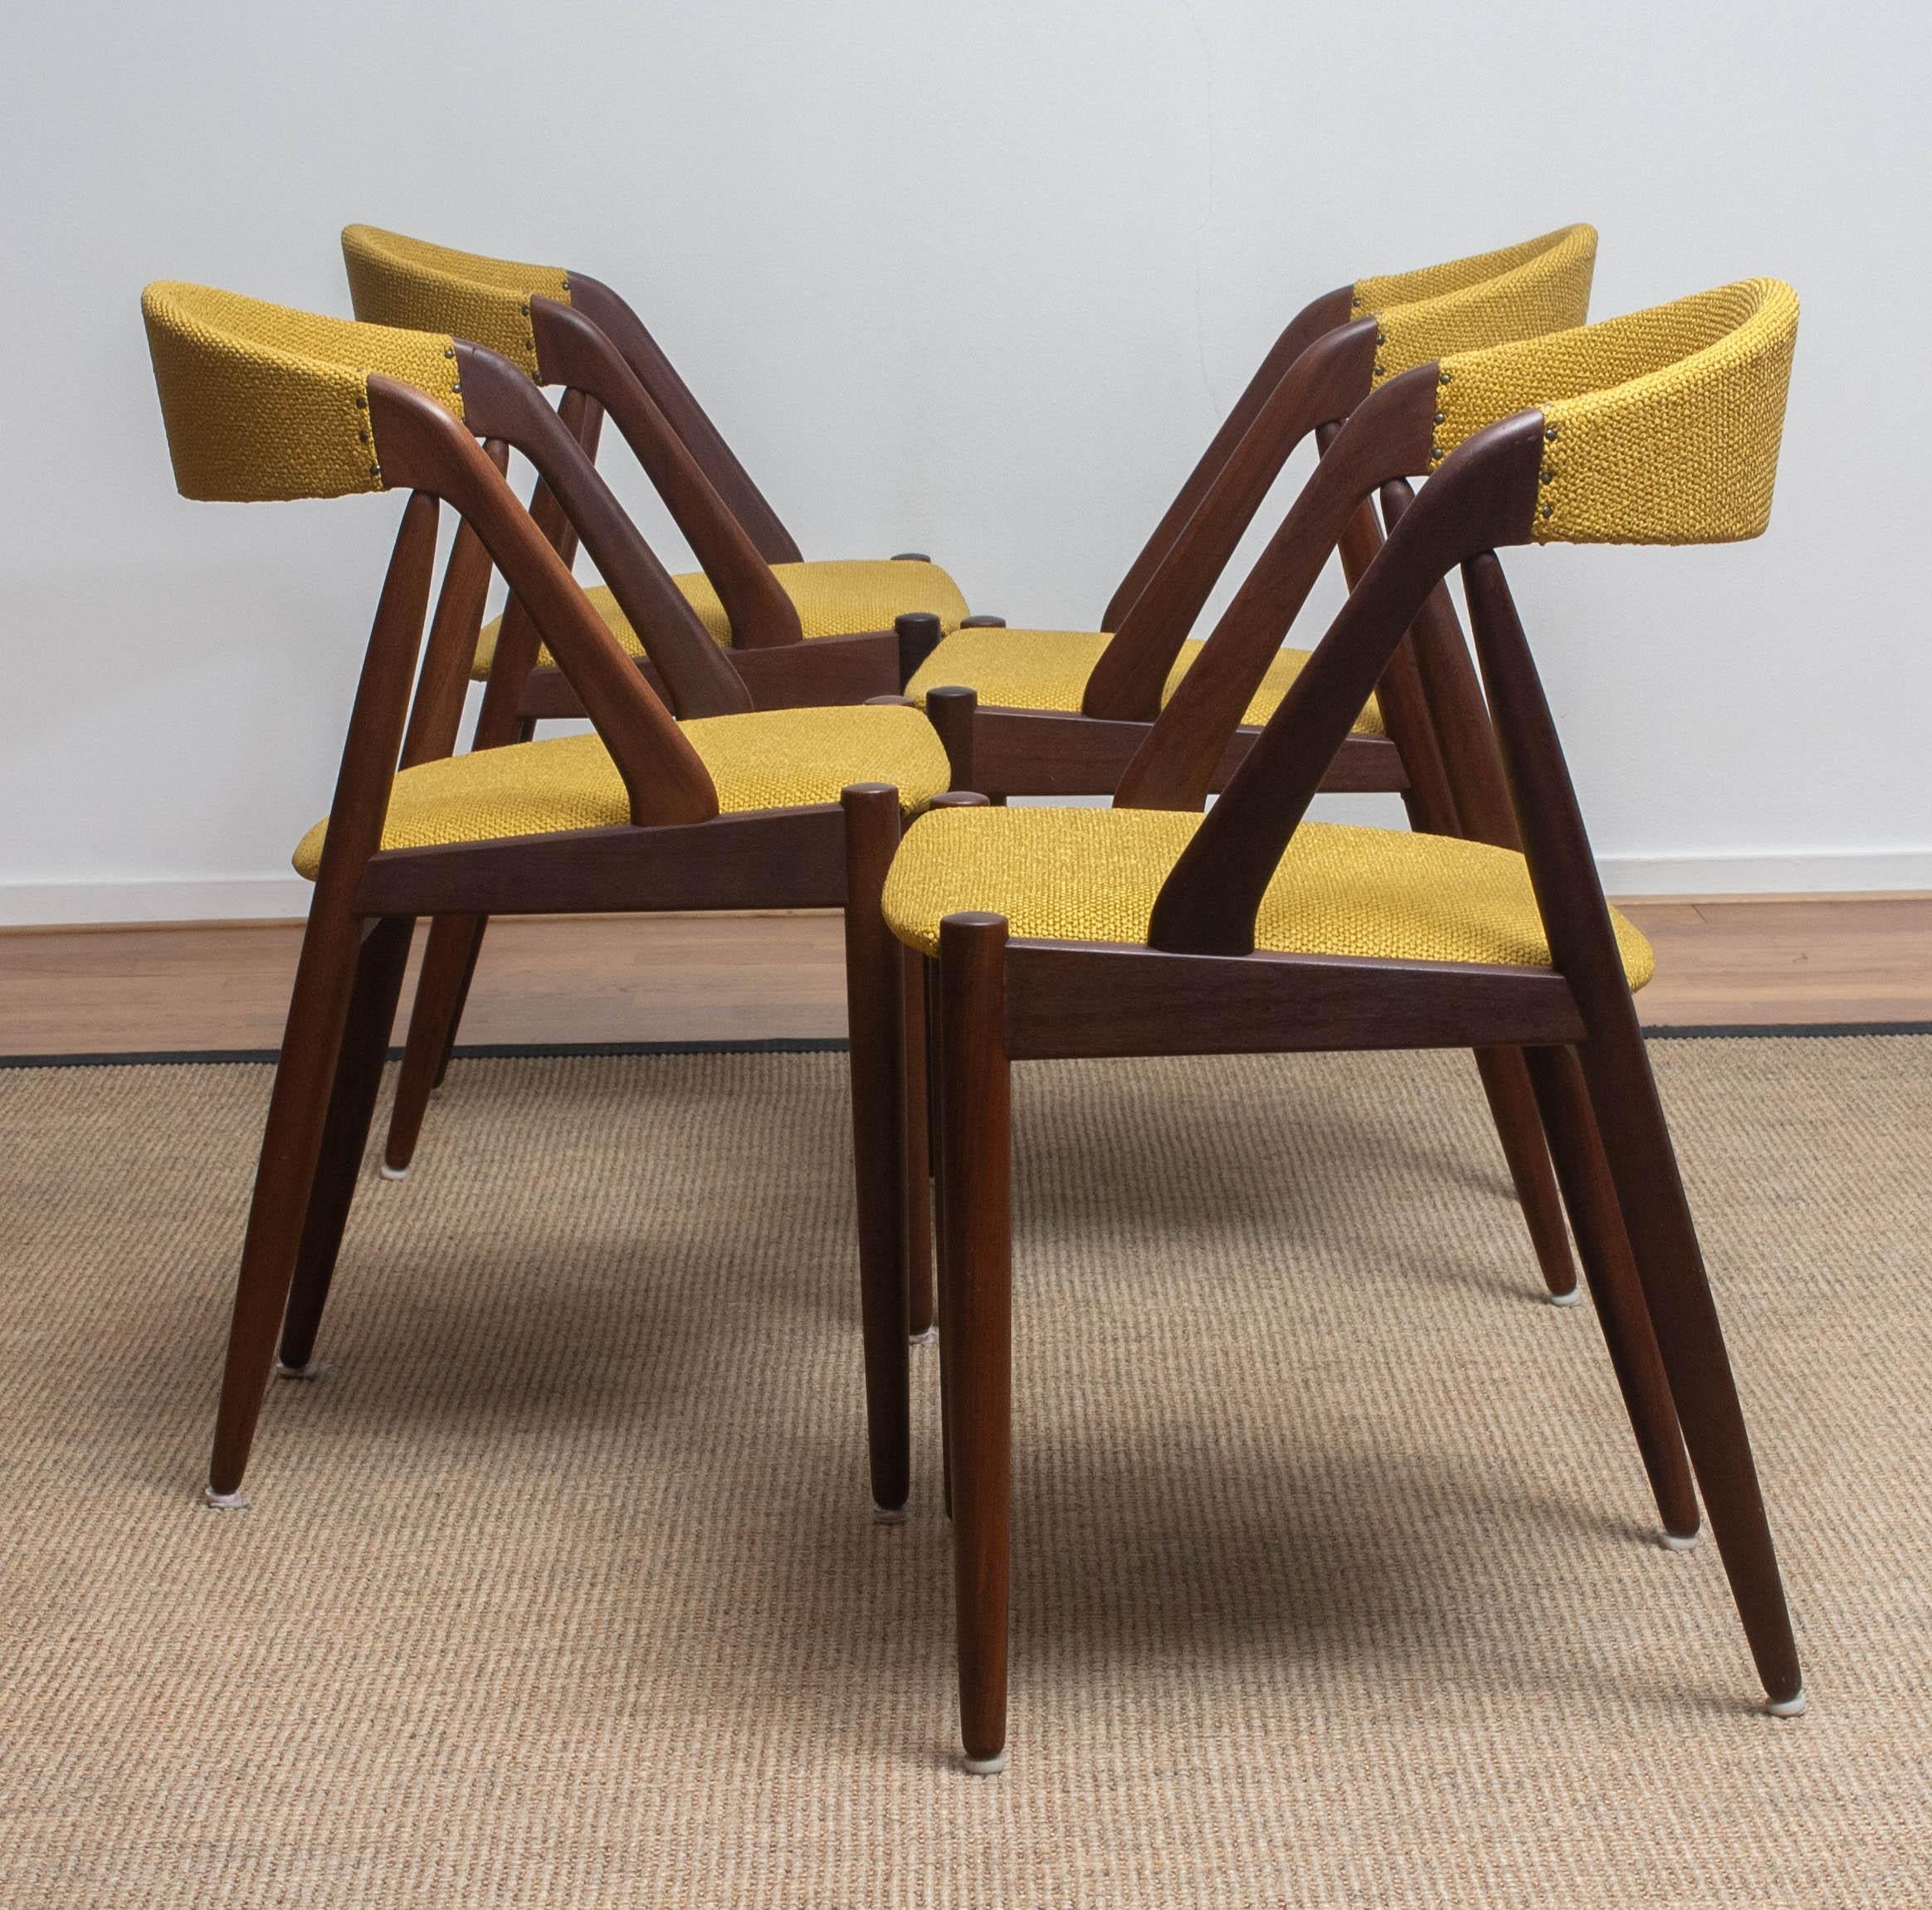 1960 Four Walnut Dining Chairs in Ochre Model 31 by Kai Kristiansen, Denmark 1